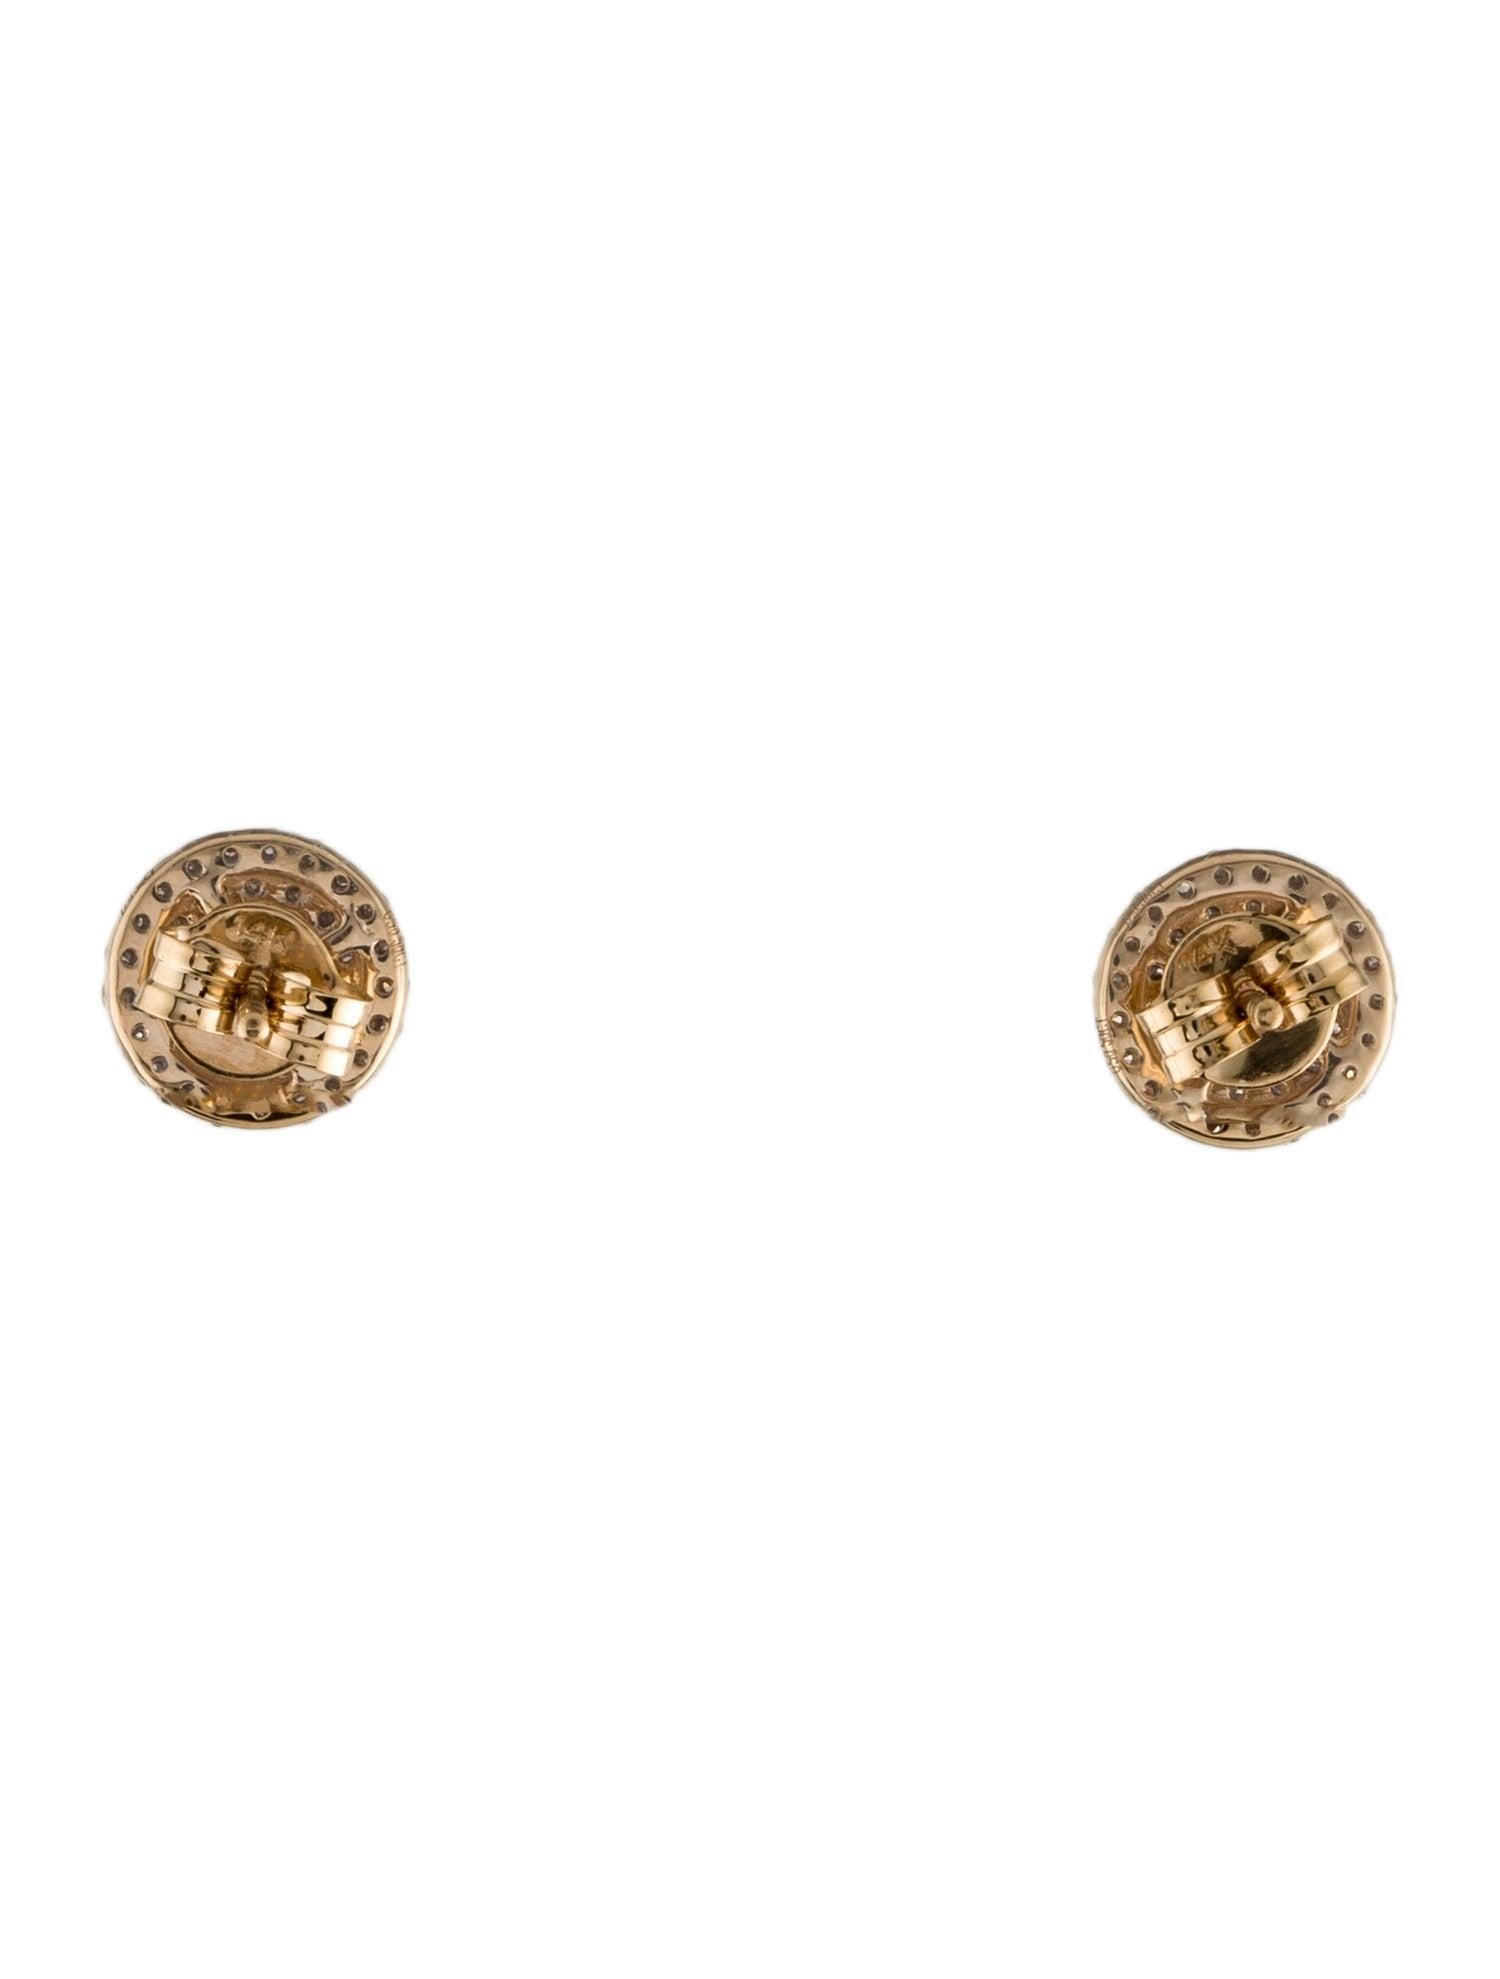 Brilliant Cut 14K Tourmaline & Diamond Stud Earrings - Stunning Luxury Gemstone Jewelry For Sale